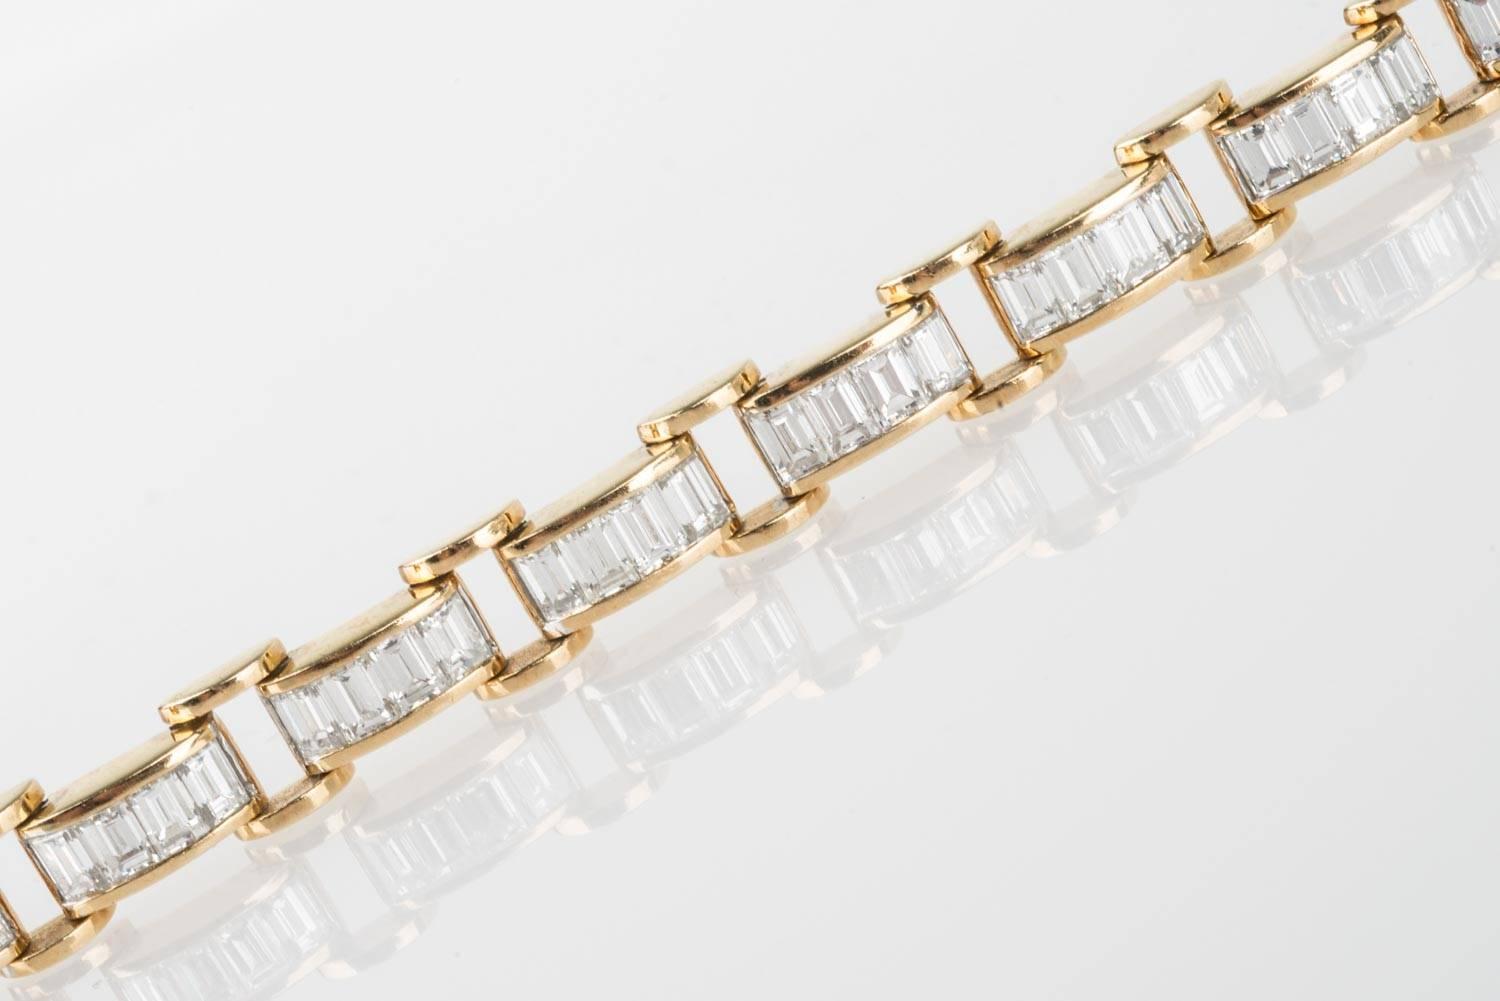 18k Gold 6.85 Carat & 18K Gold, GIA Certified Diamond Bracelet in a Chain Link Style